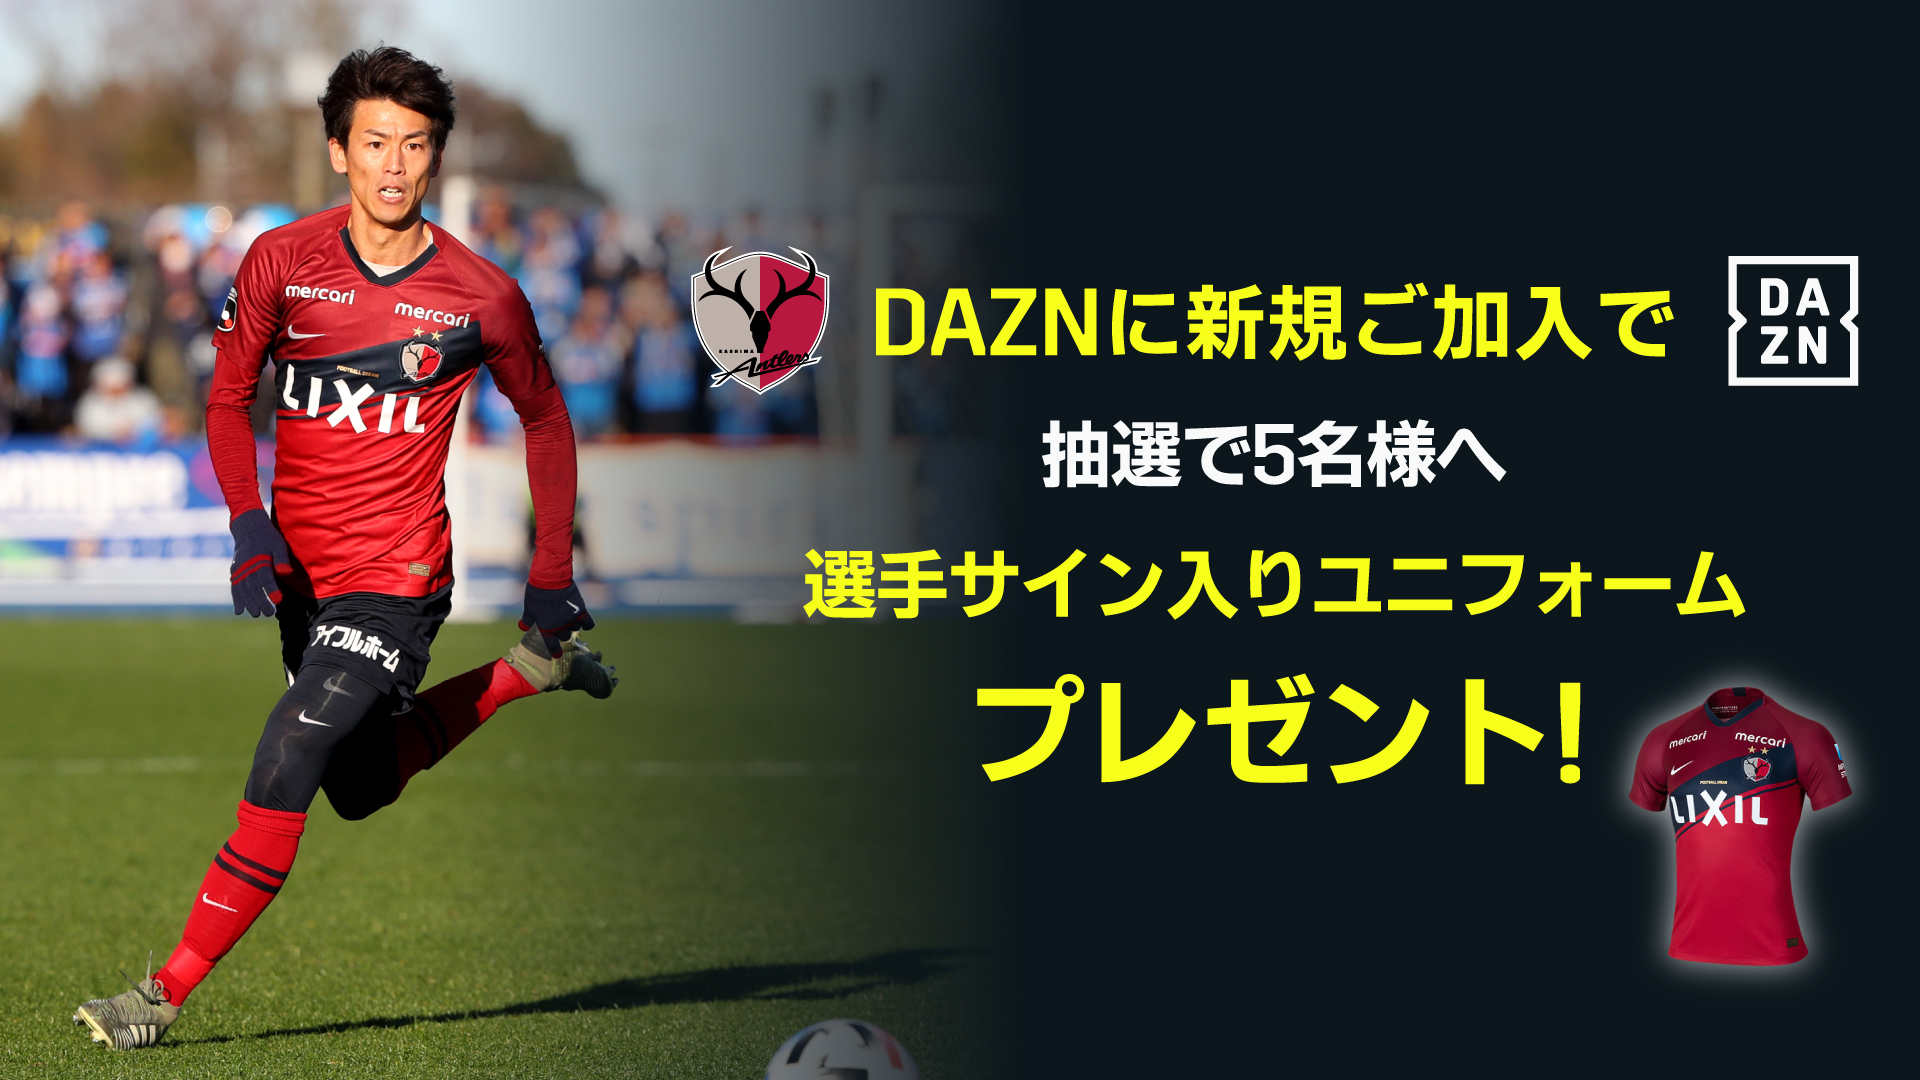 Daznが鹿島アントラーズ ヴィッセル神戸と新規入会キャンペーン実施中 サッカーキング